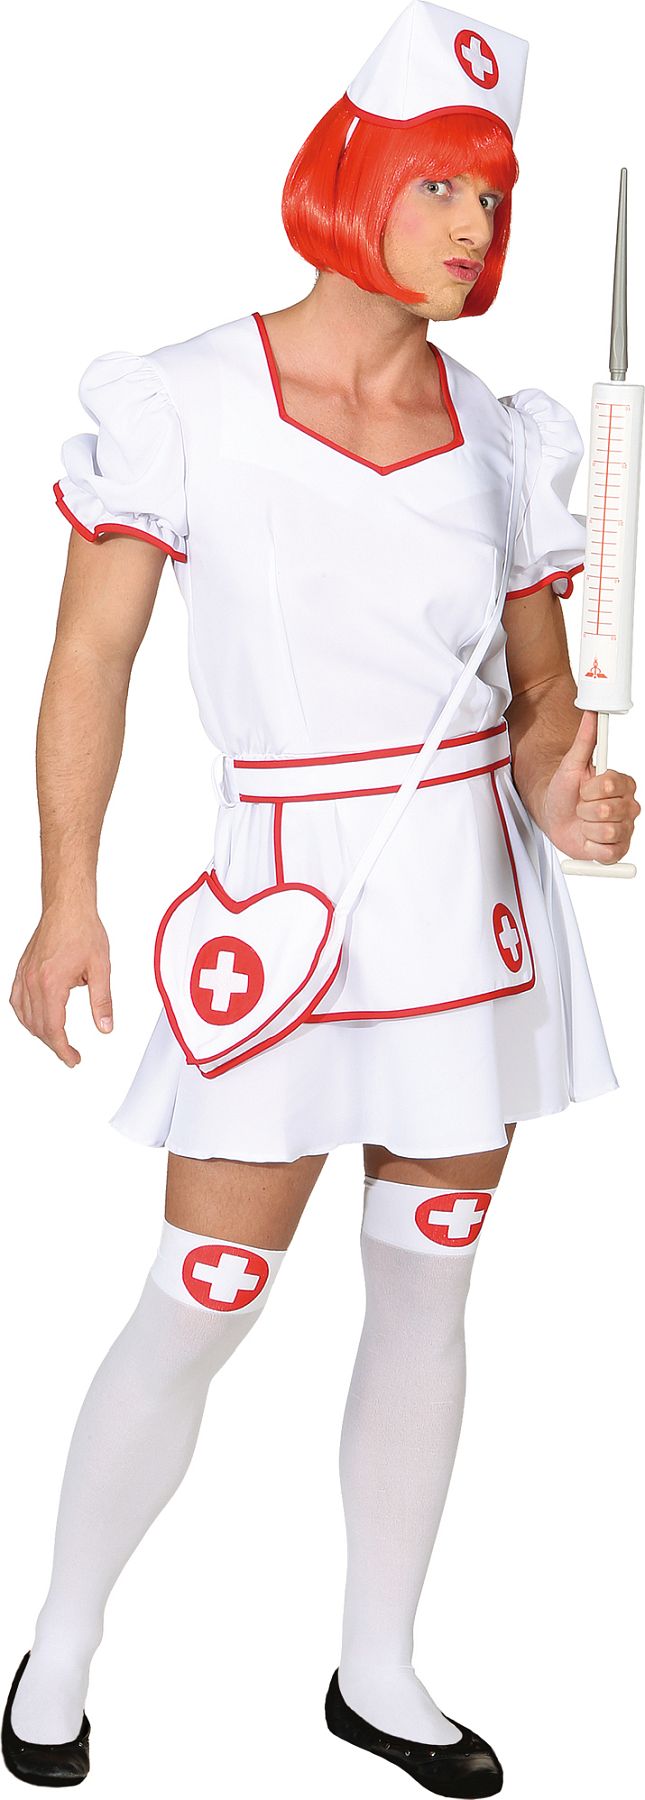 Nurse costume for men